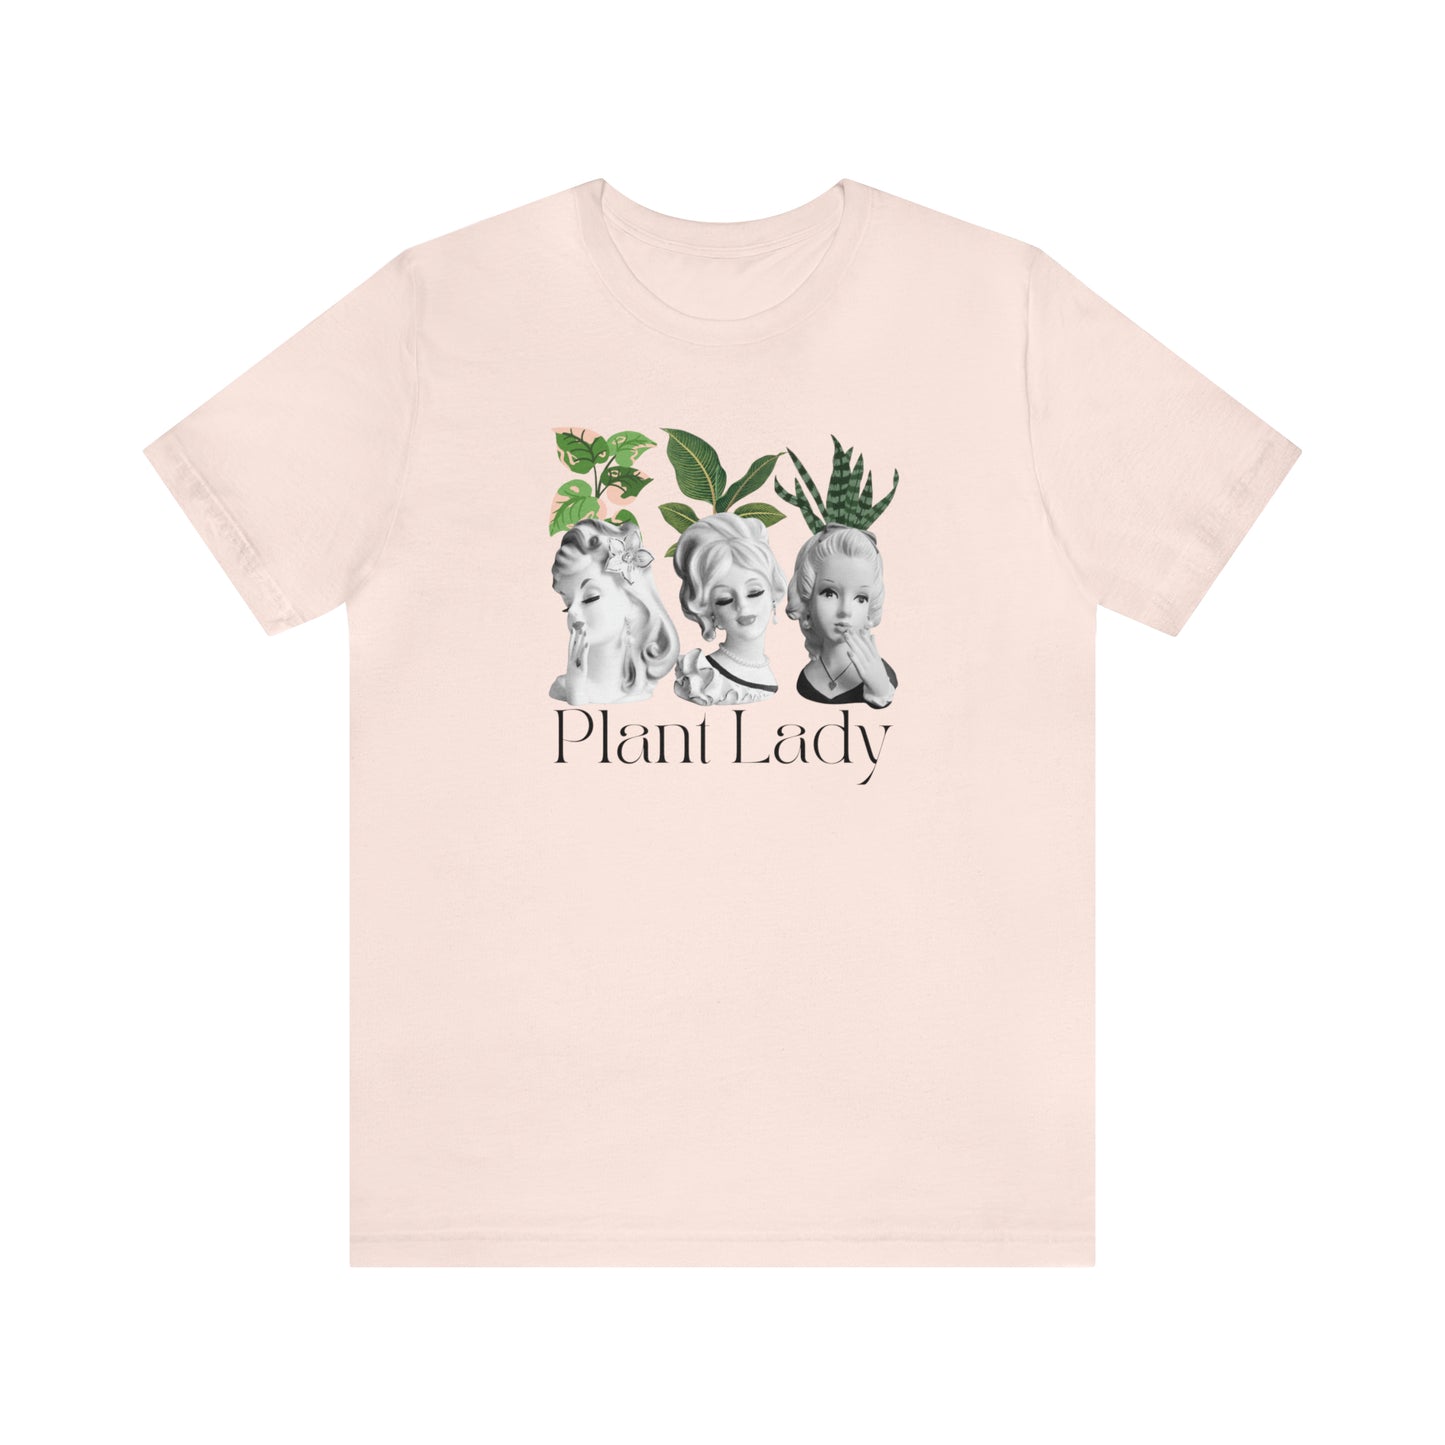 Plant Lady Head Vase Shirt - Unisex Jersey Short Sleeve Tee